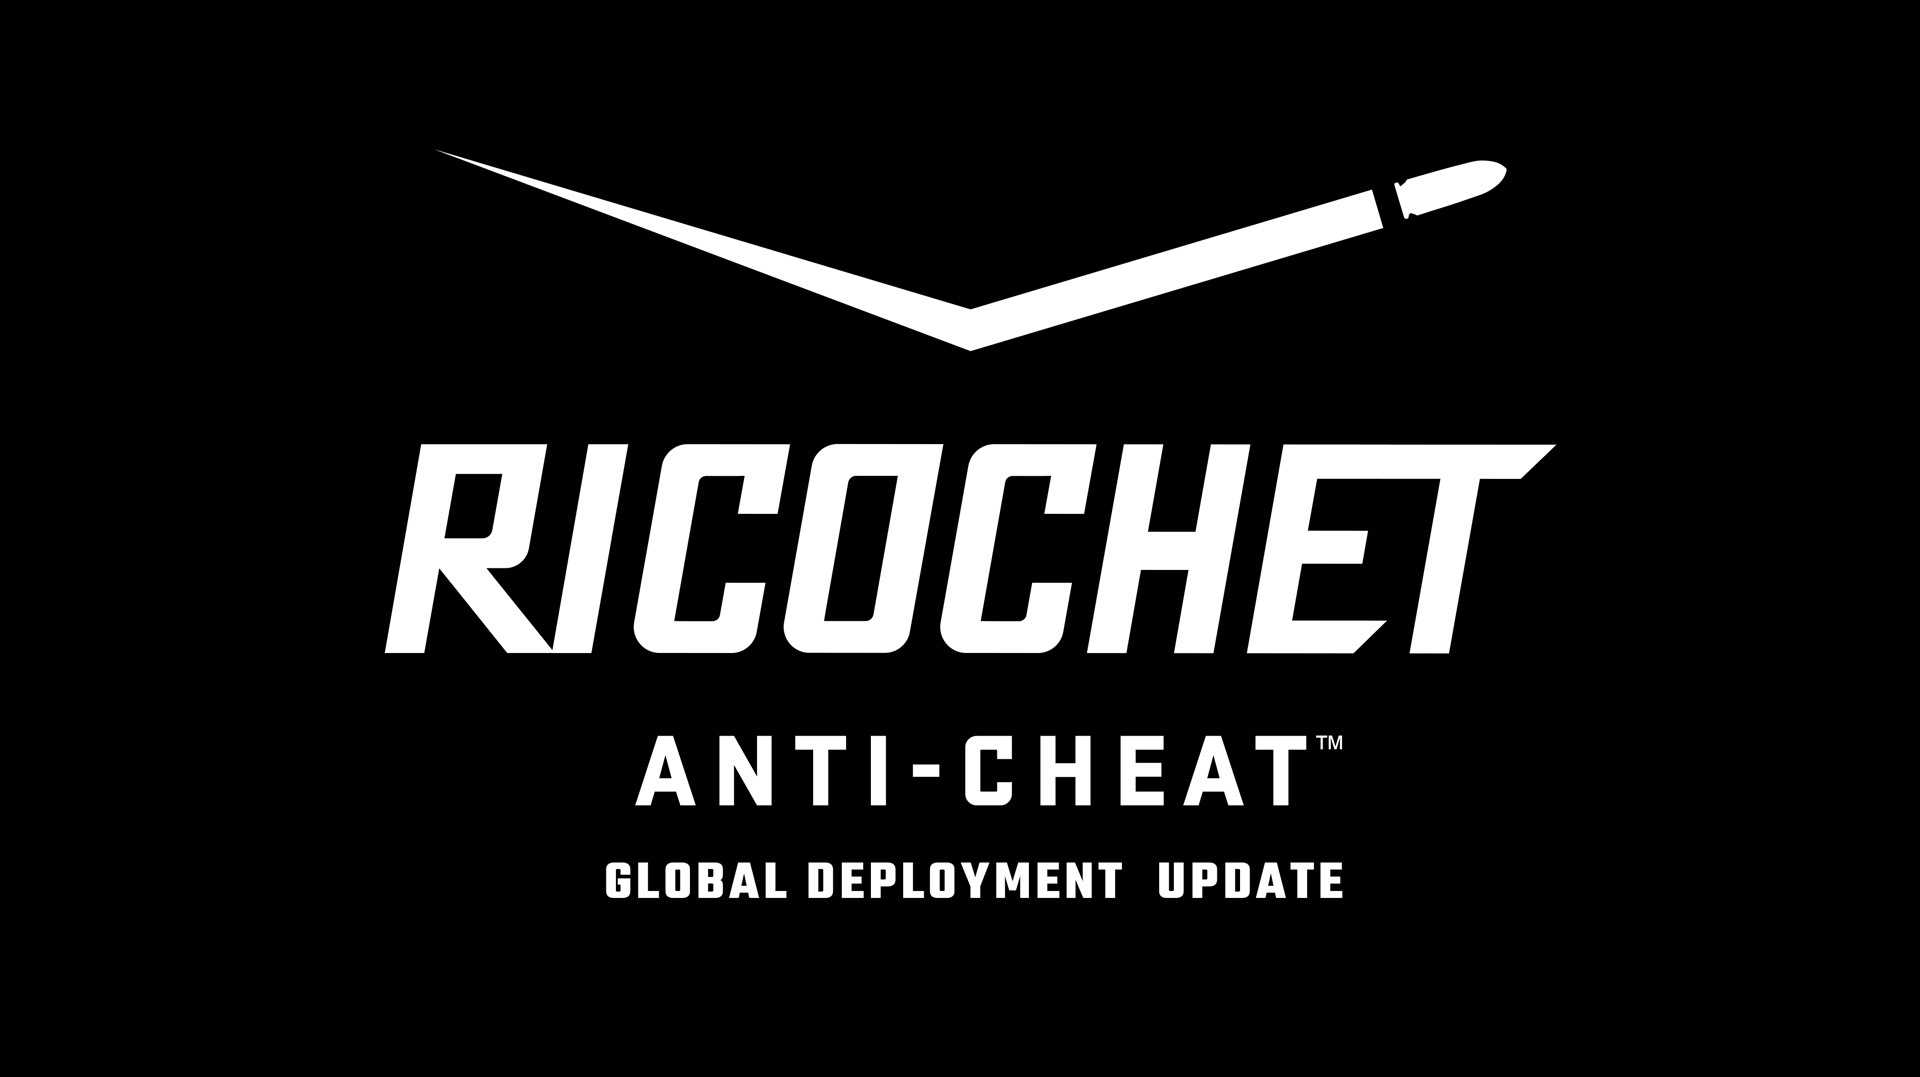 RICOCHET Anti-Cheat™ progress report—Warzone PC driver deployment goes global 